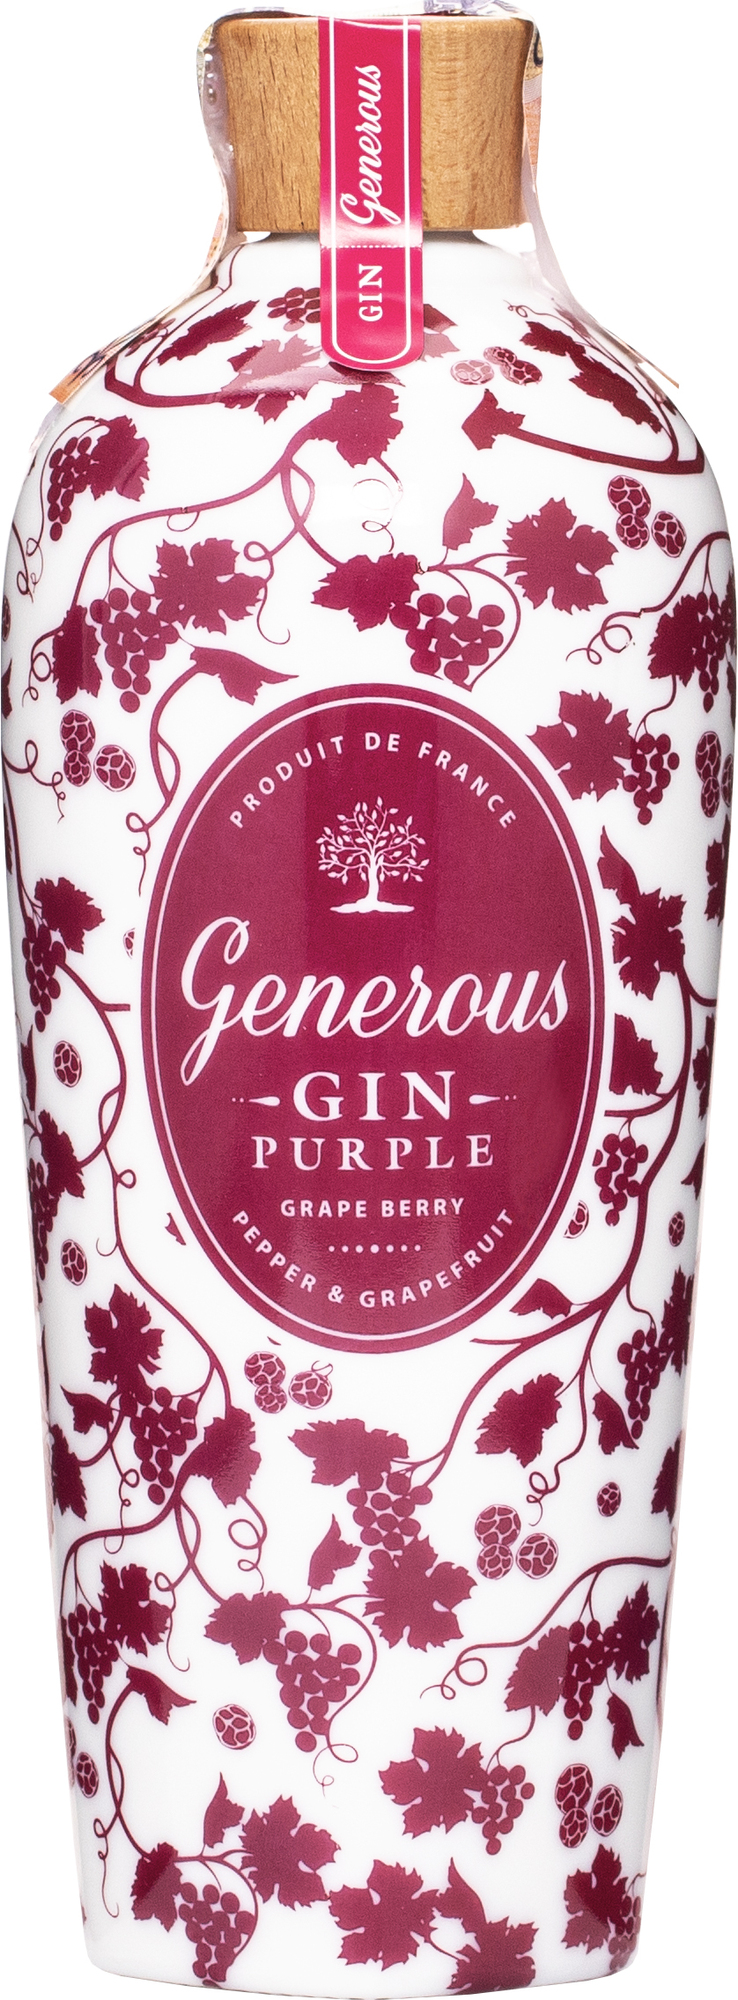 Generous Gin Generous Purple gin, 44%, 0,7l